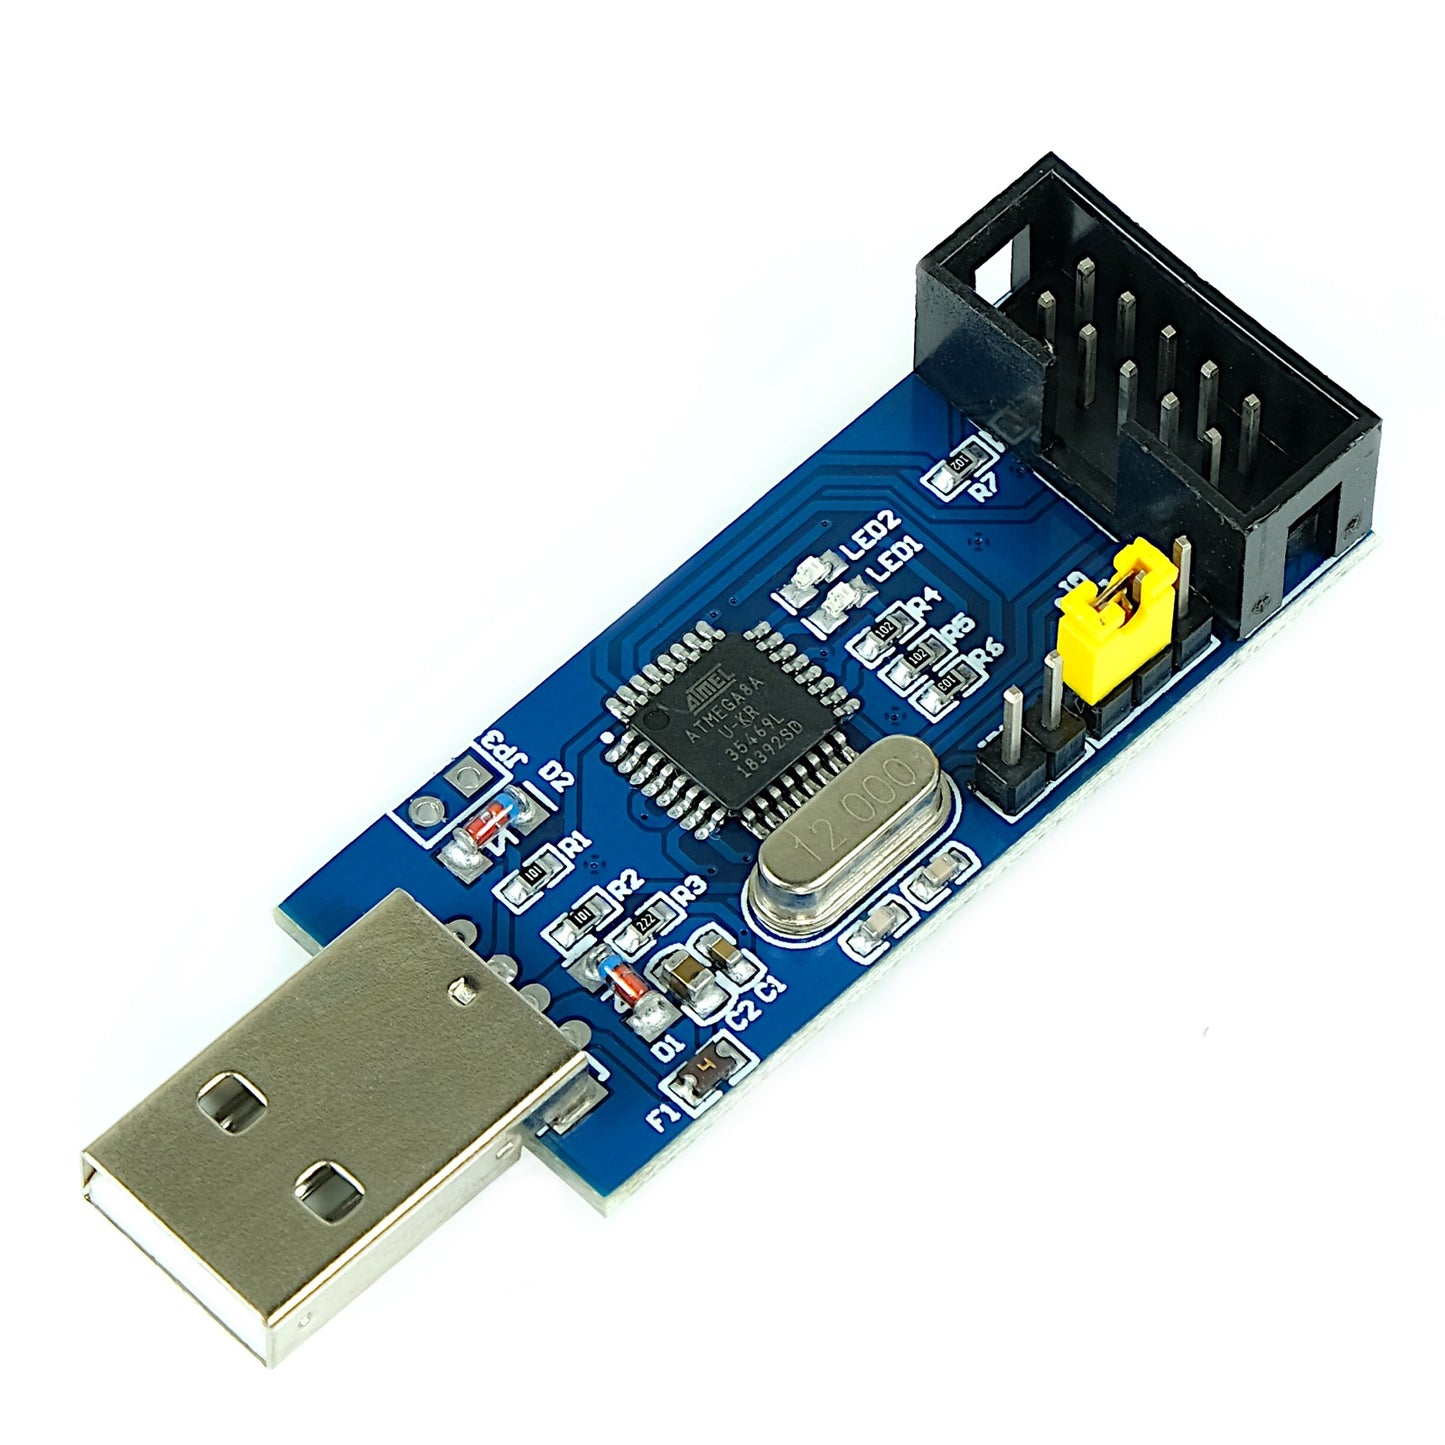 USBasp USB-ISP-Programmer for ATMEL AVR and Arduino